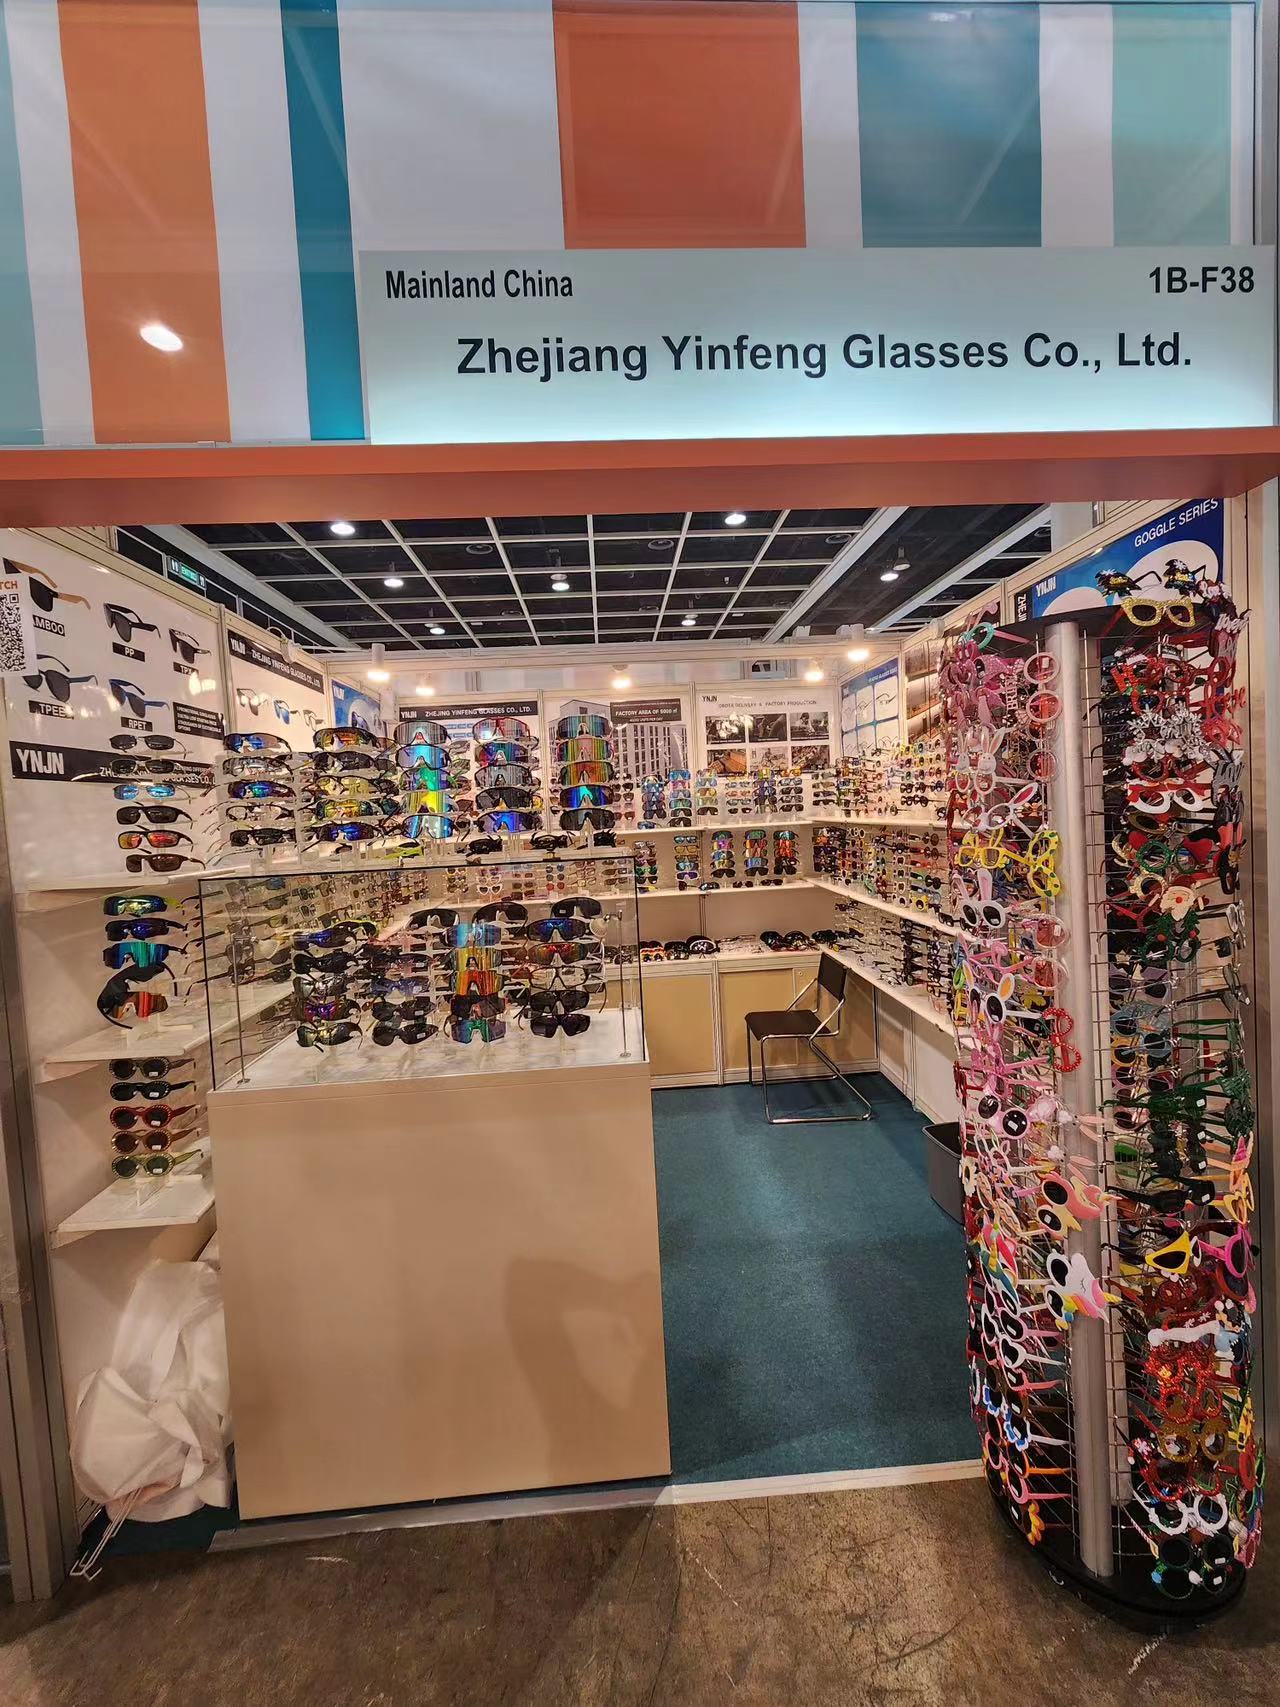 Una visione di successo: l'esperienza della nostra fabbrica di occhiali alla fiera Gifts & Premium di Hong Kong